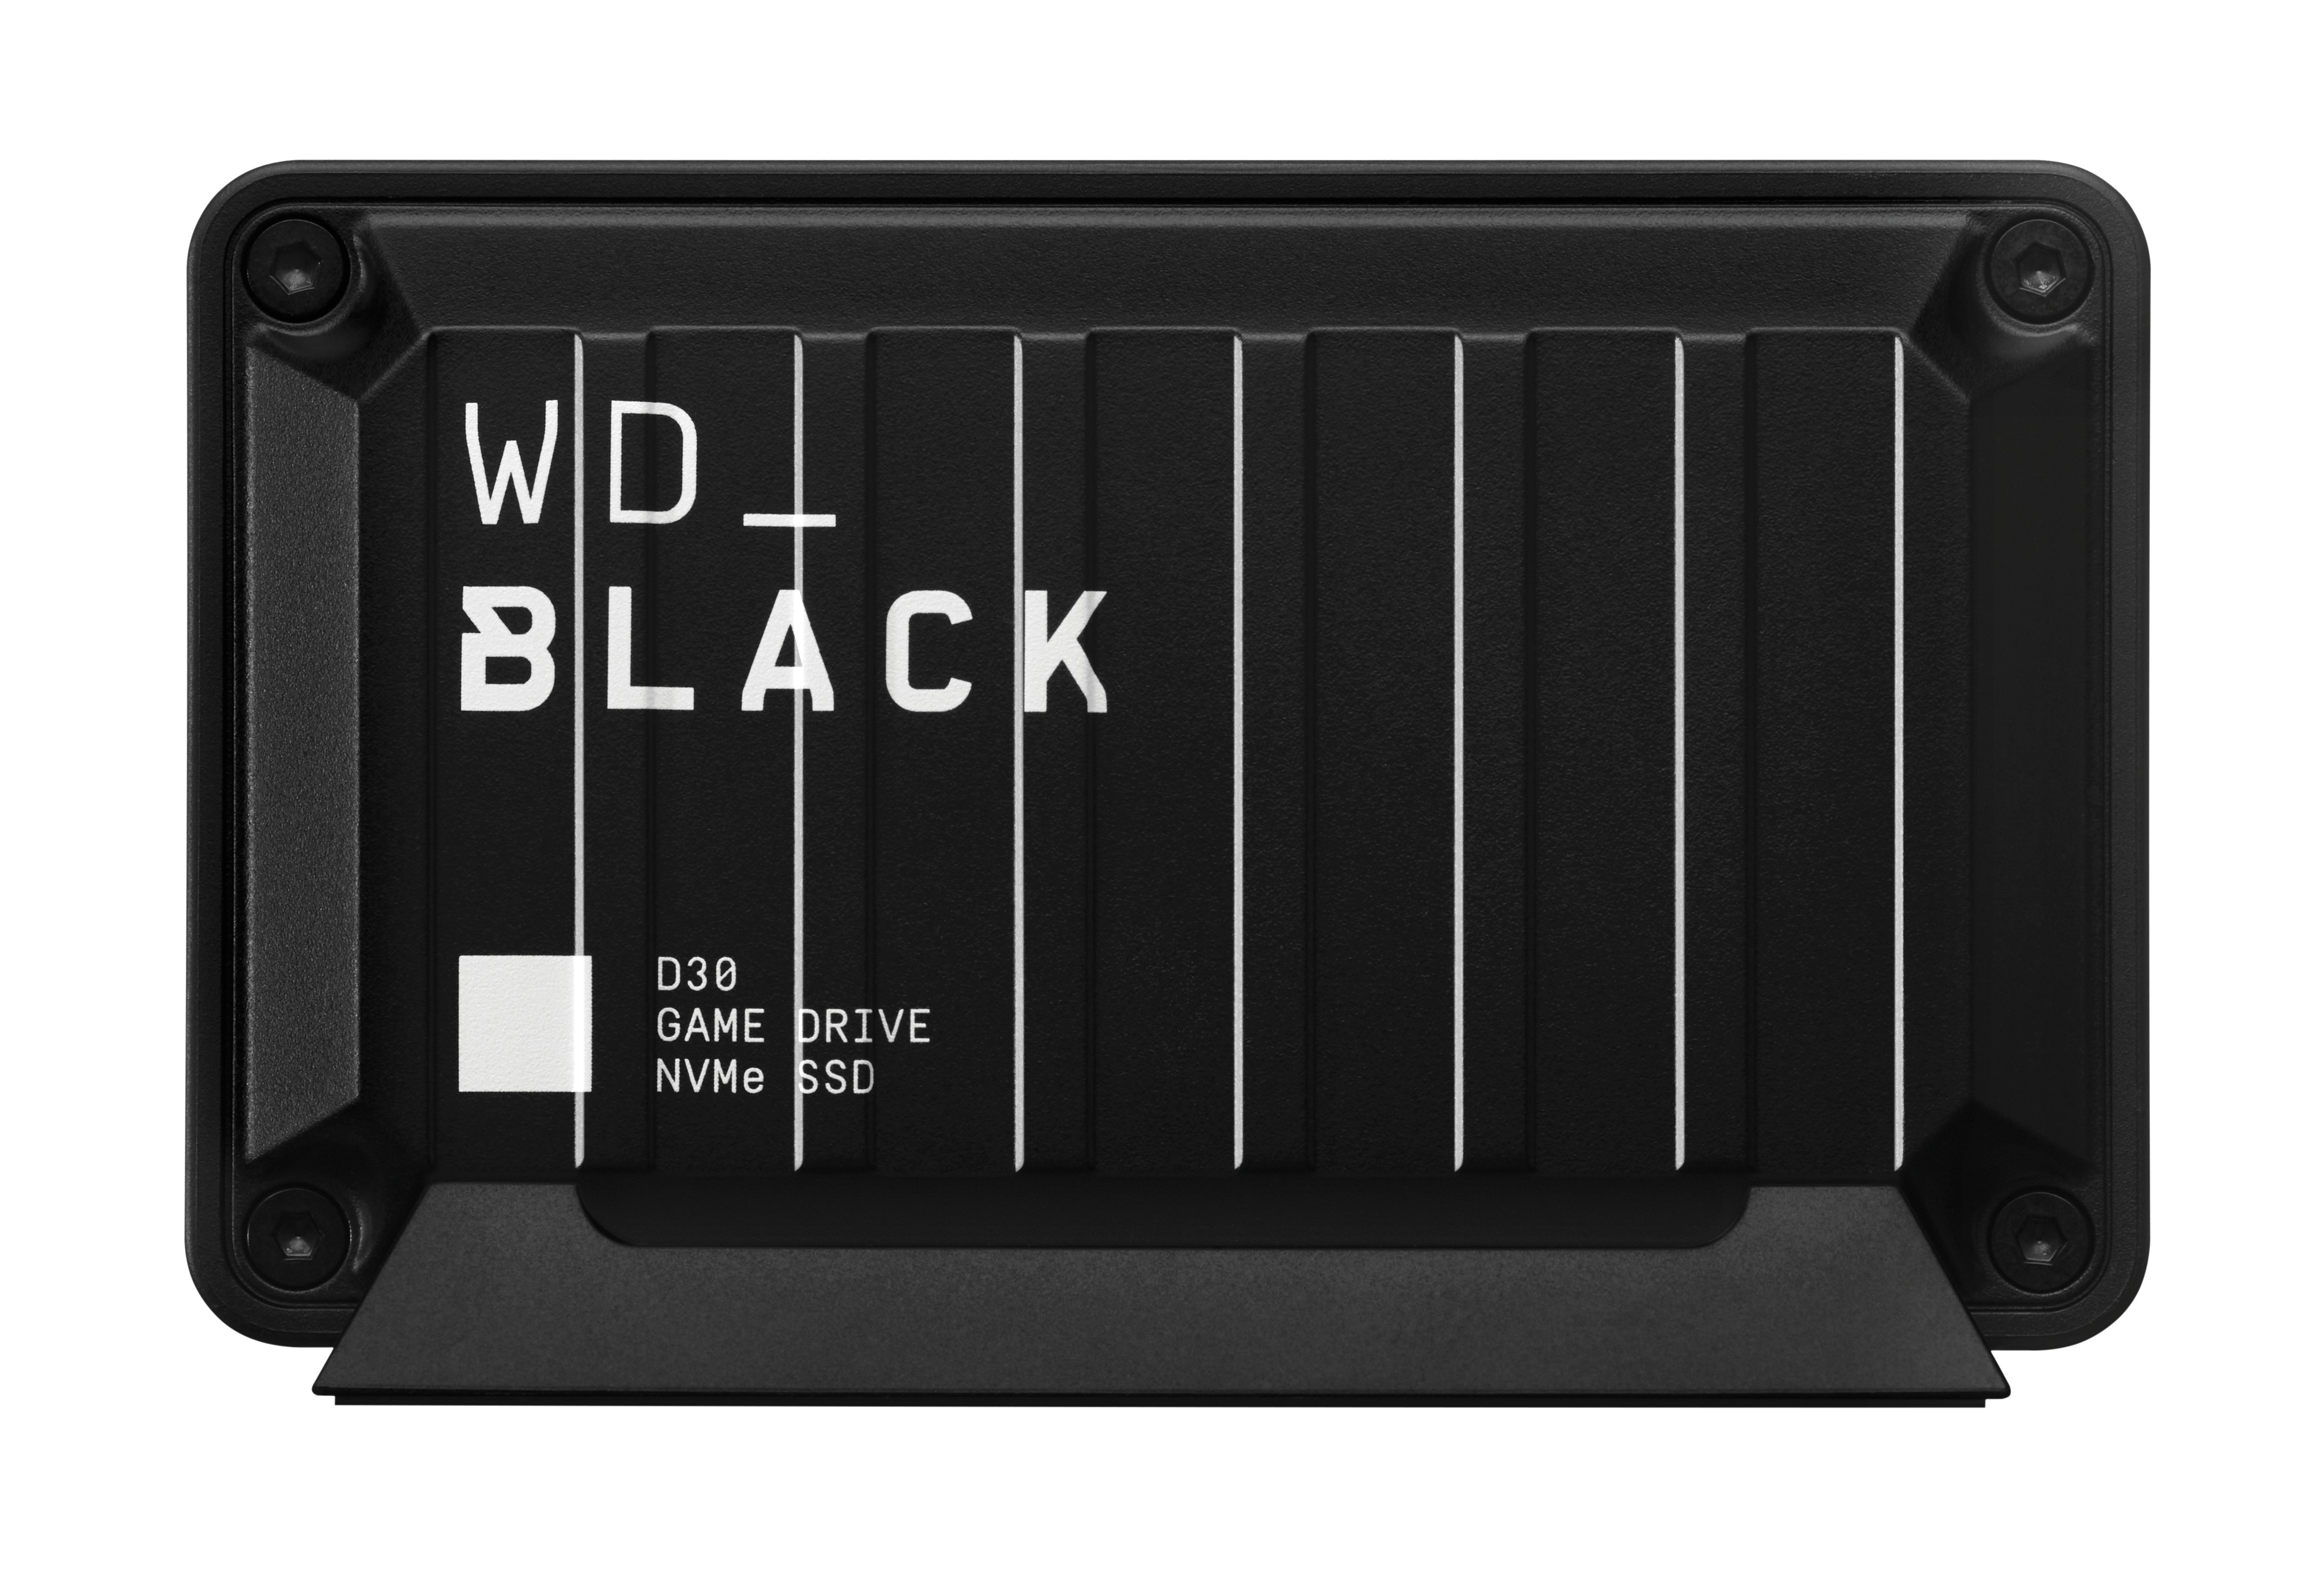 WD_BLACK D30 Game Drive (500 GB)